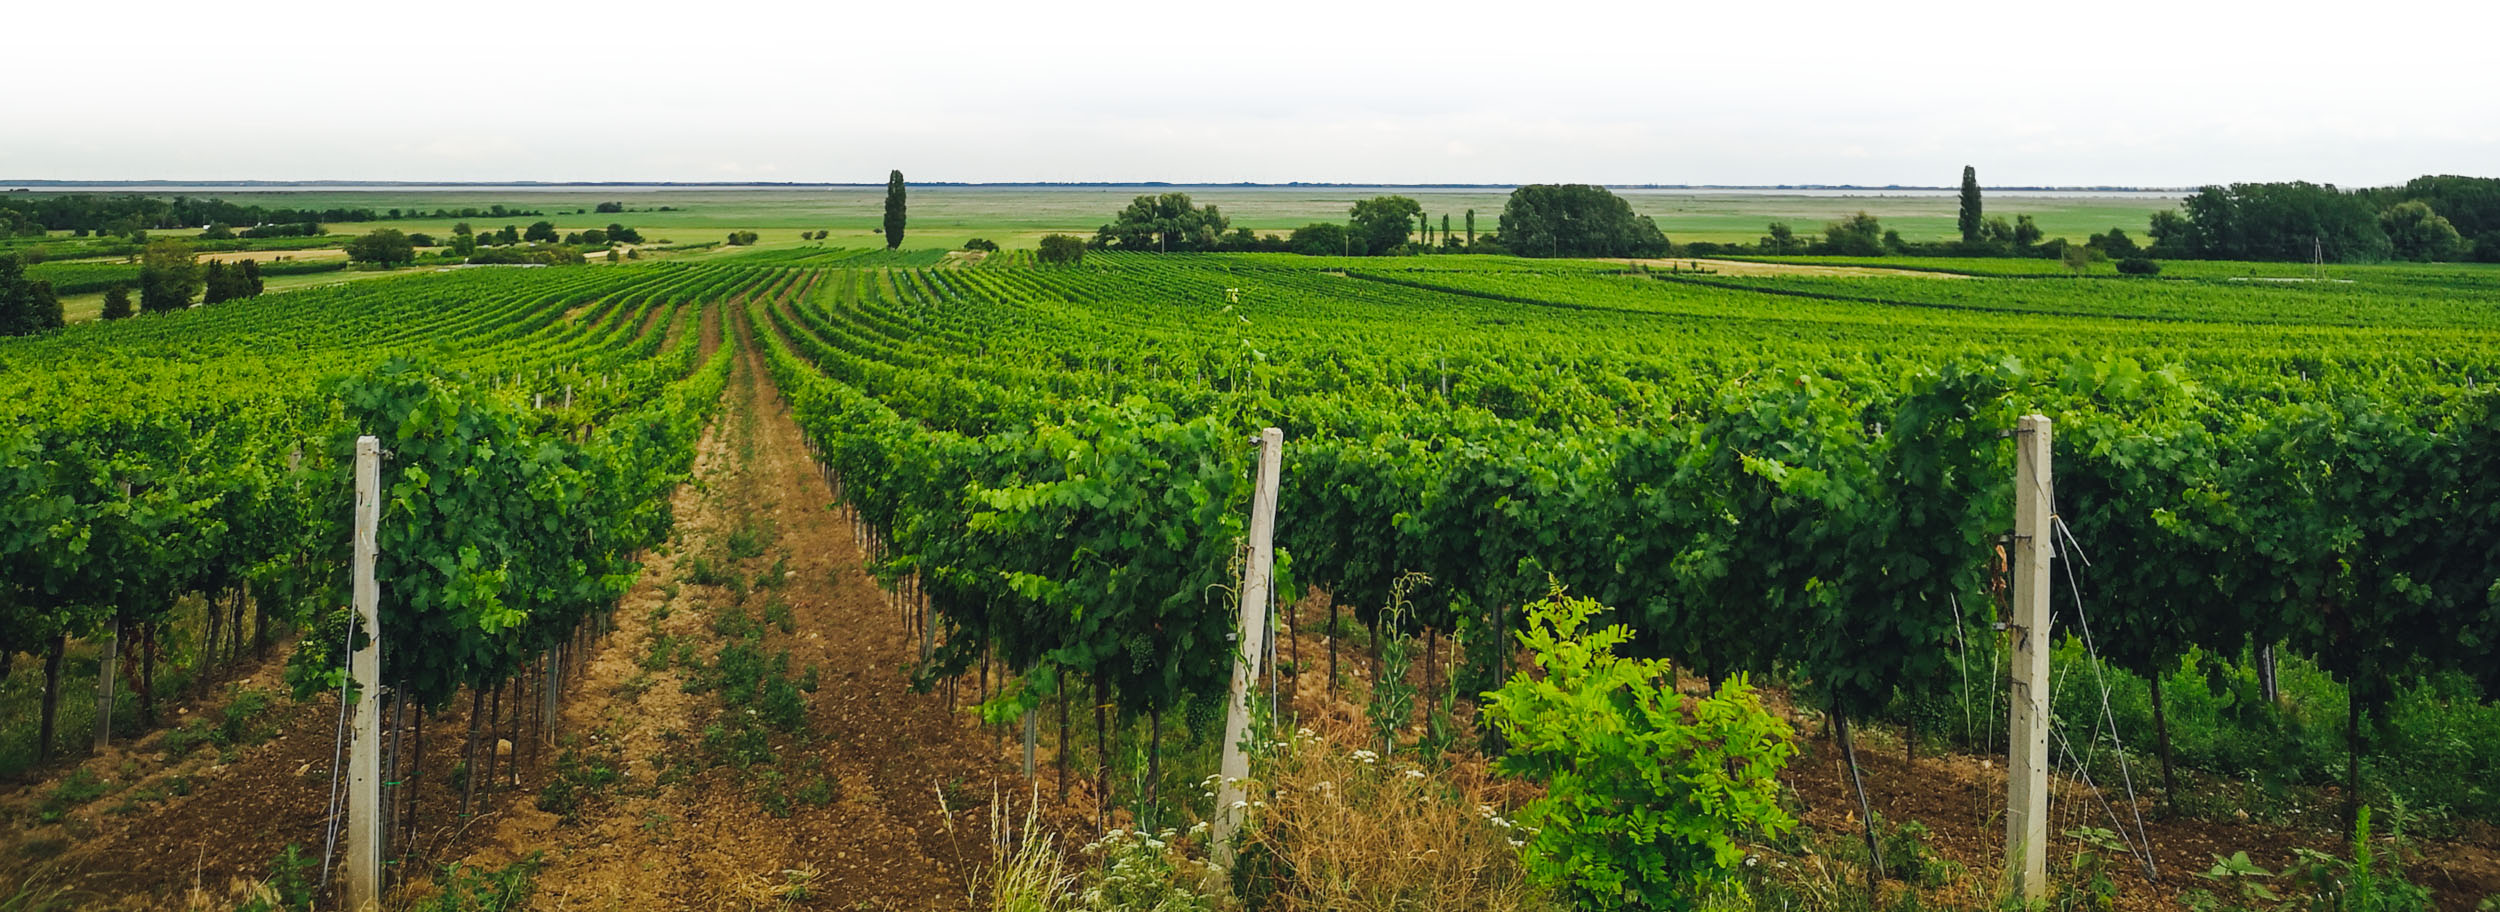 Vineyards of Burgenland, Austria